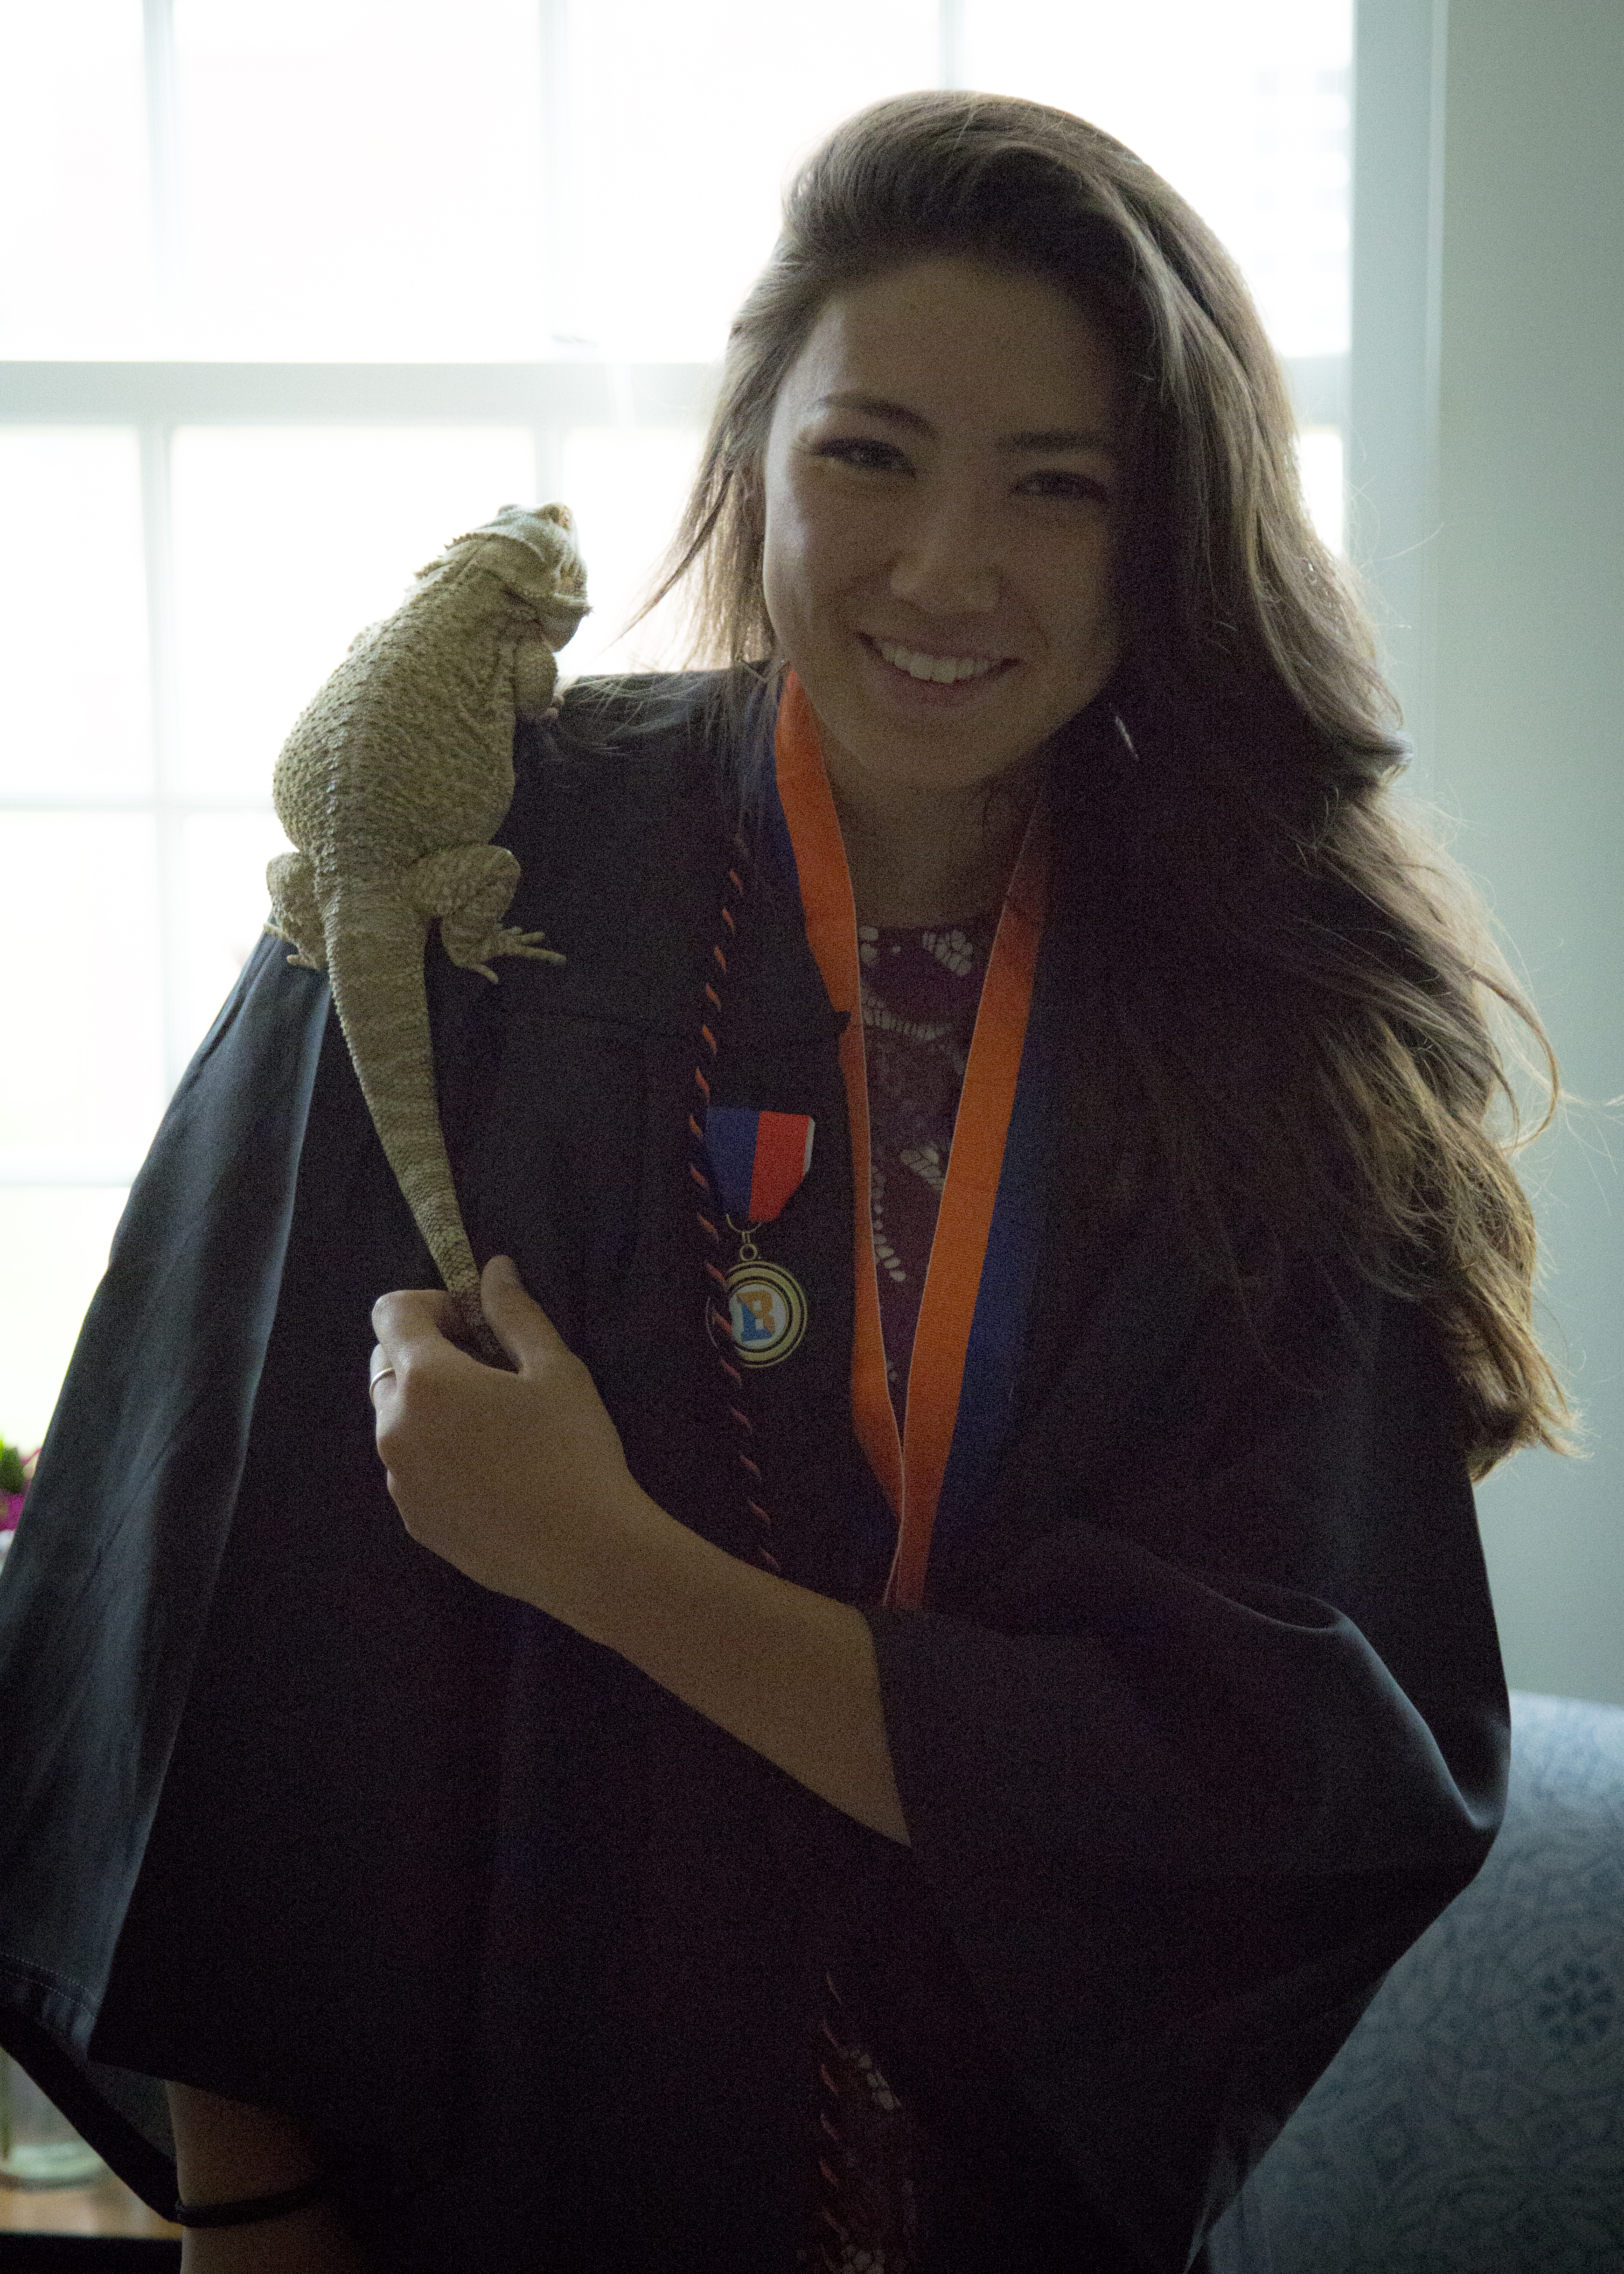 Sarah's graduation, nicole photo